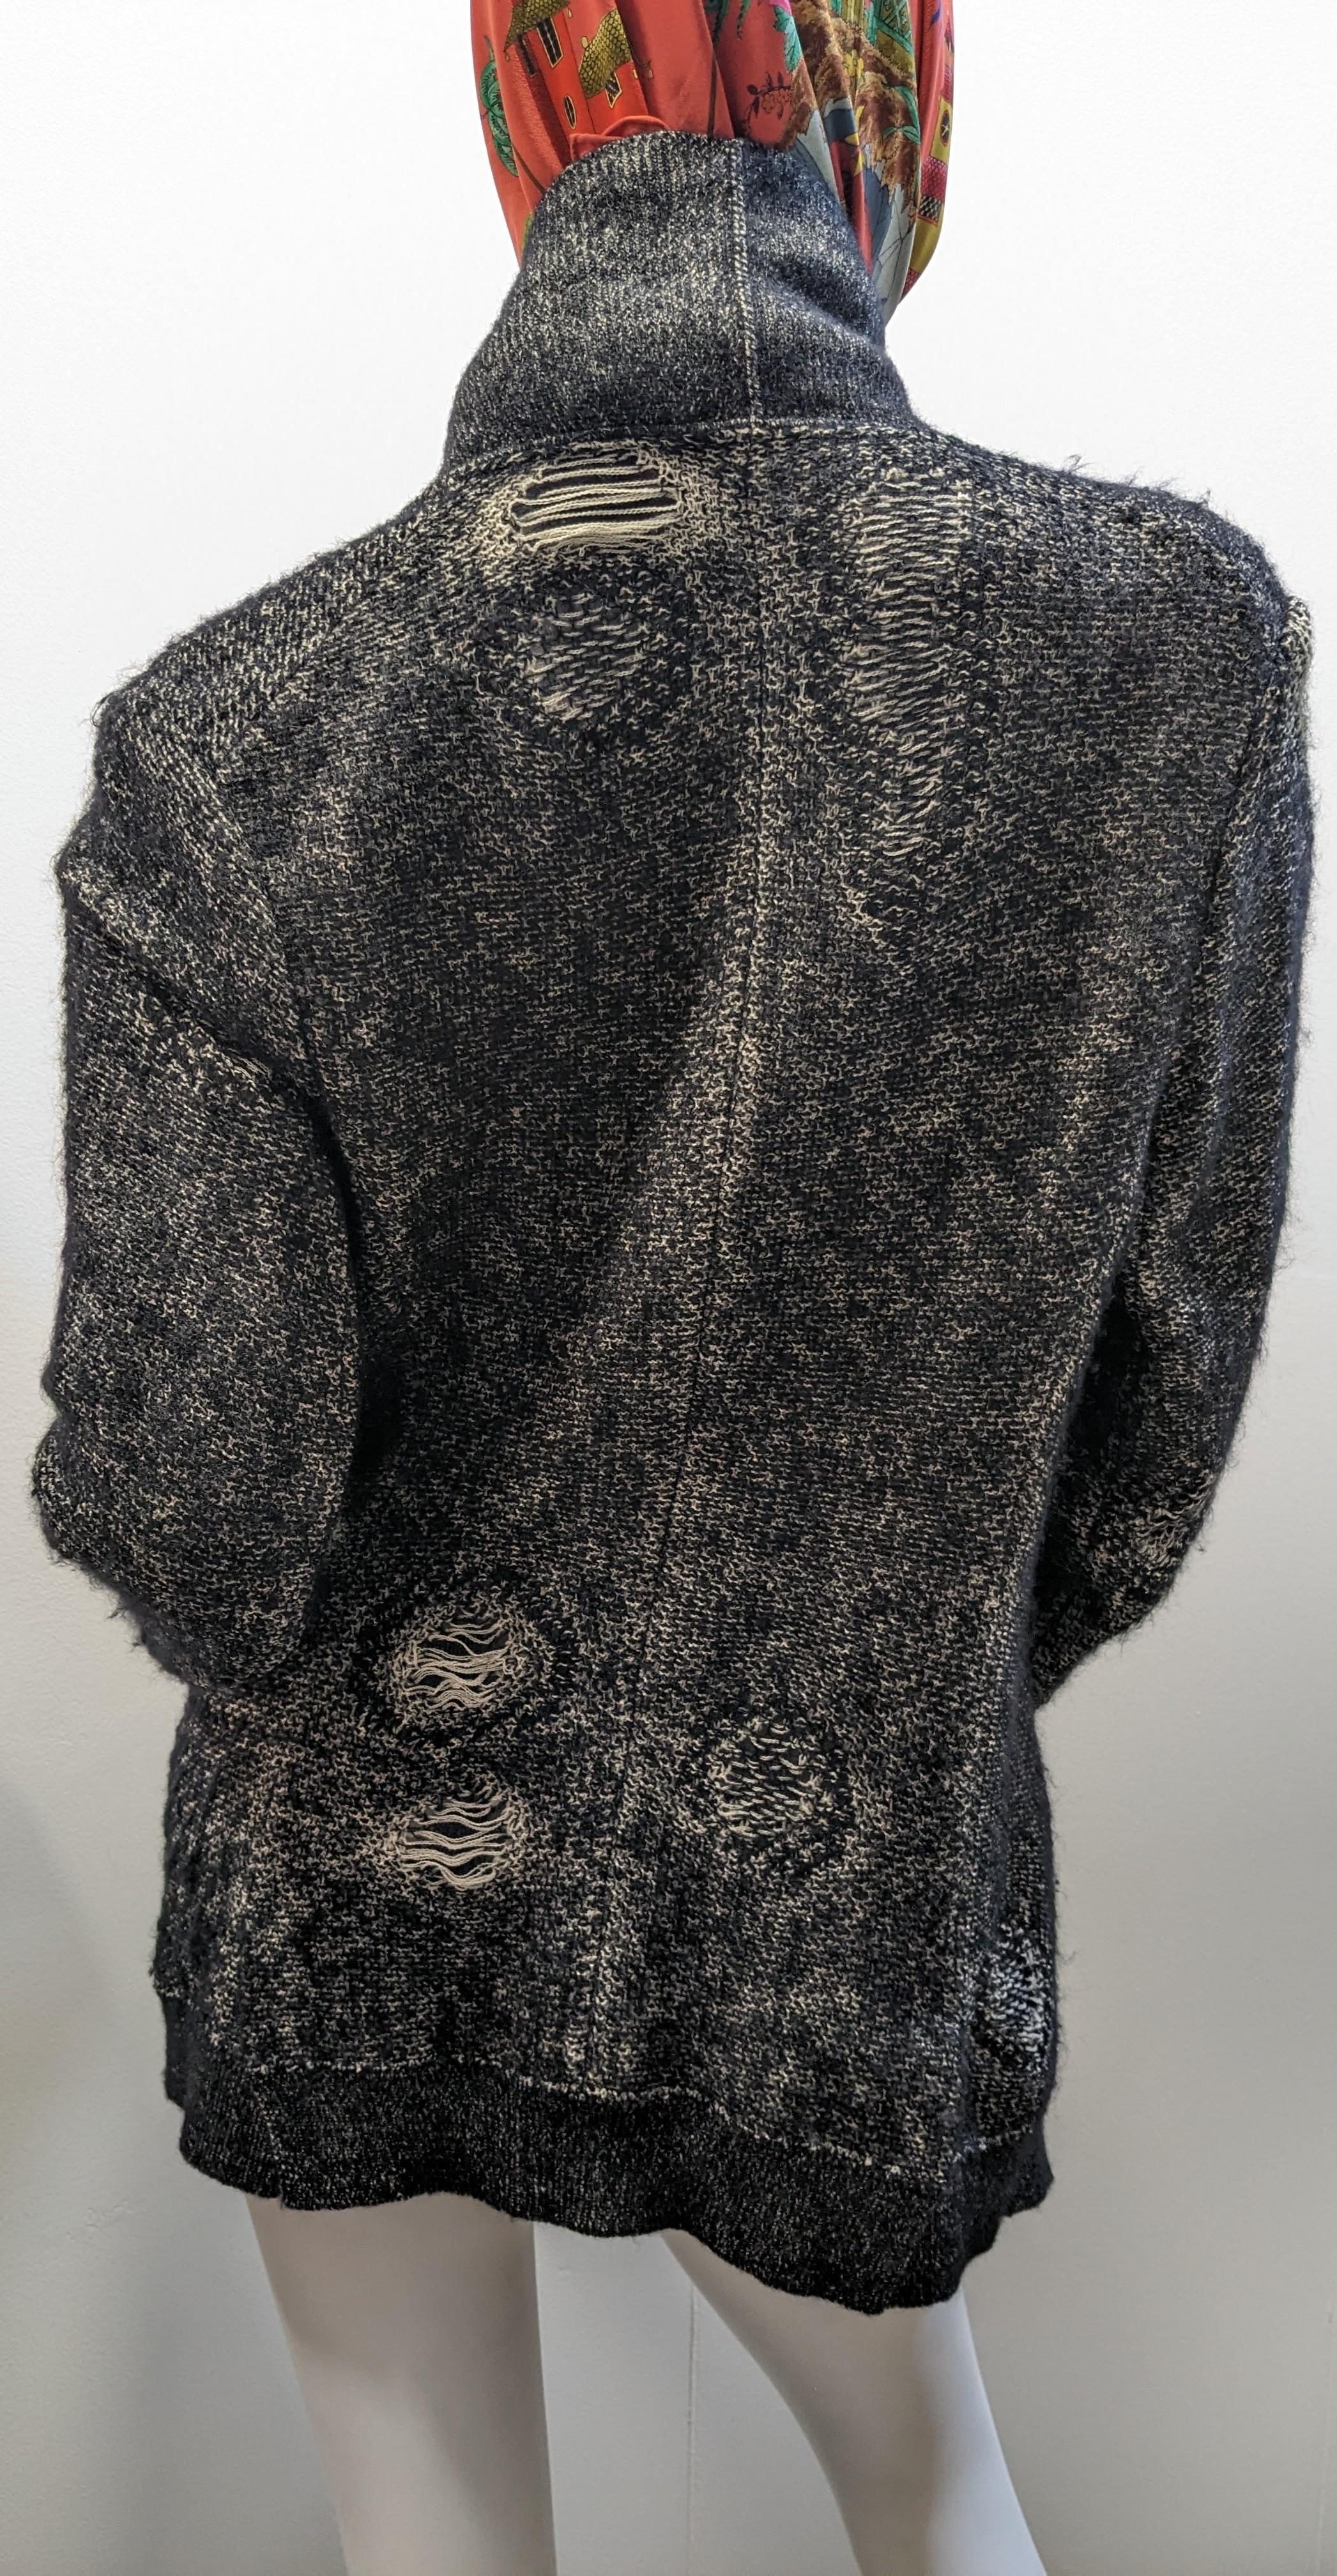  Alexander McQueen Black and light black  Wool Jacket /Sweater  1